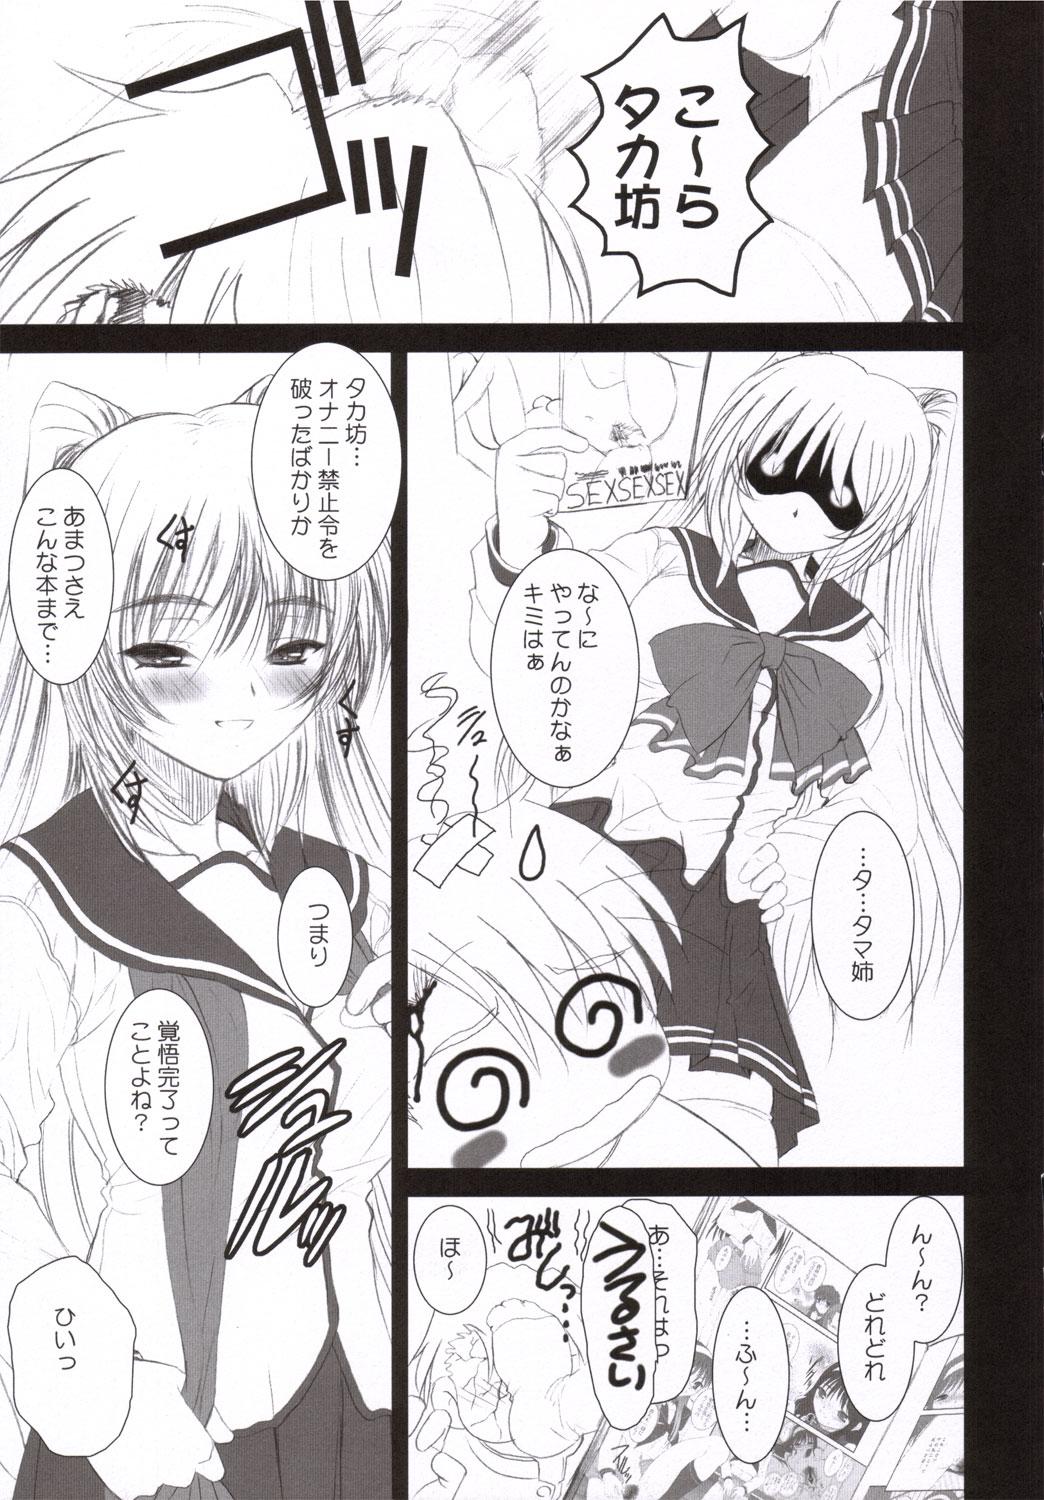 Deflowered Tamaki Strikes! - Toheart2 Virgin - Page 4